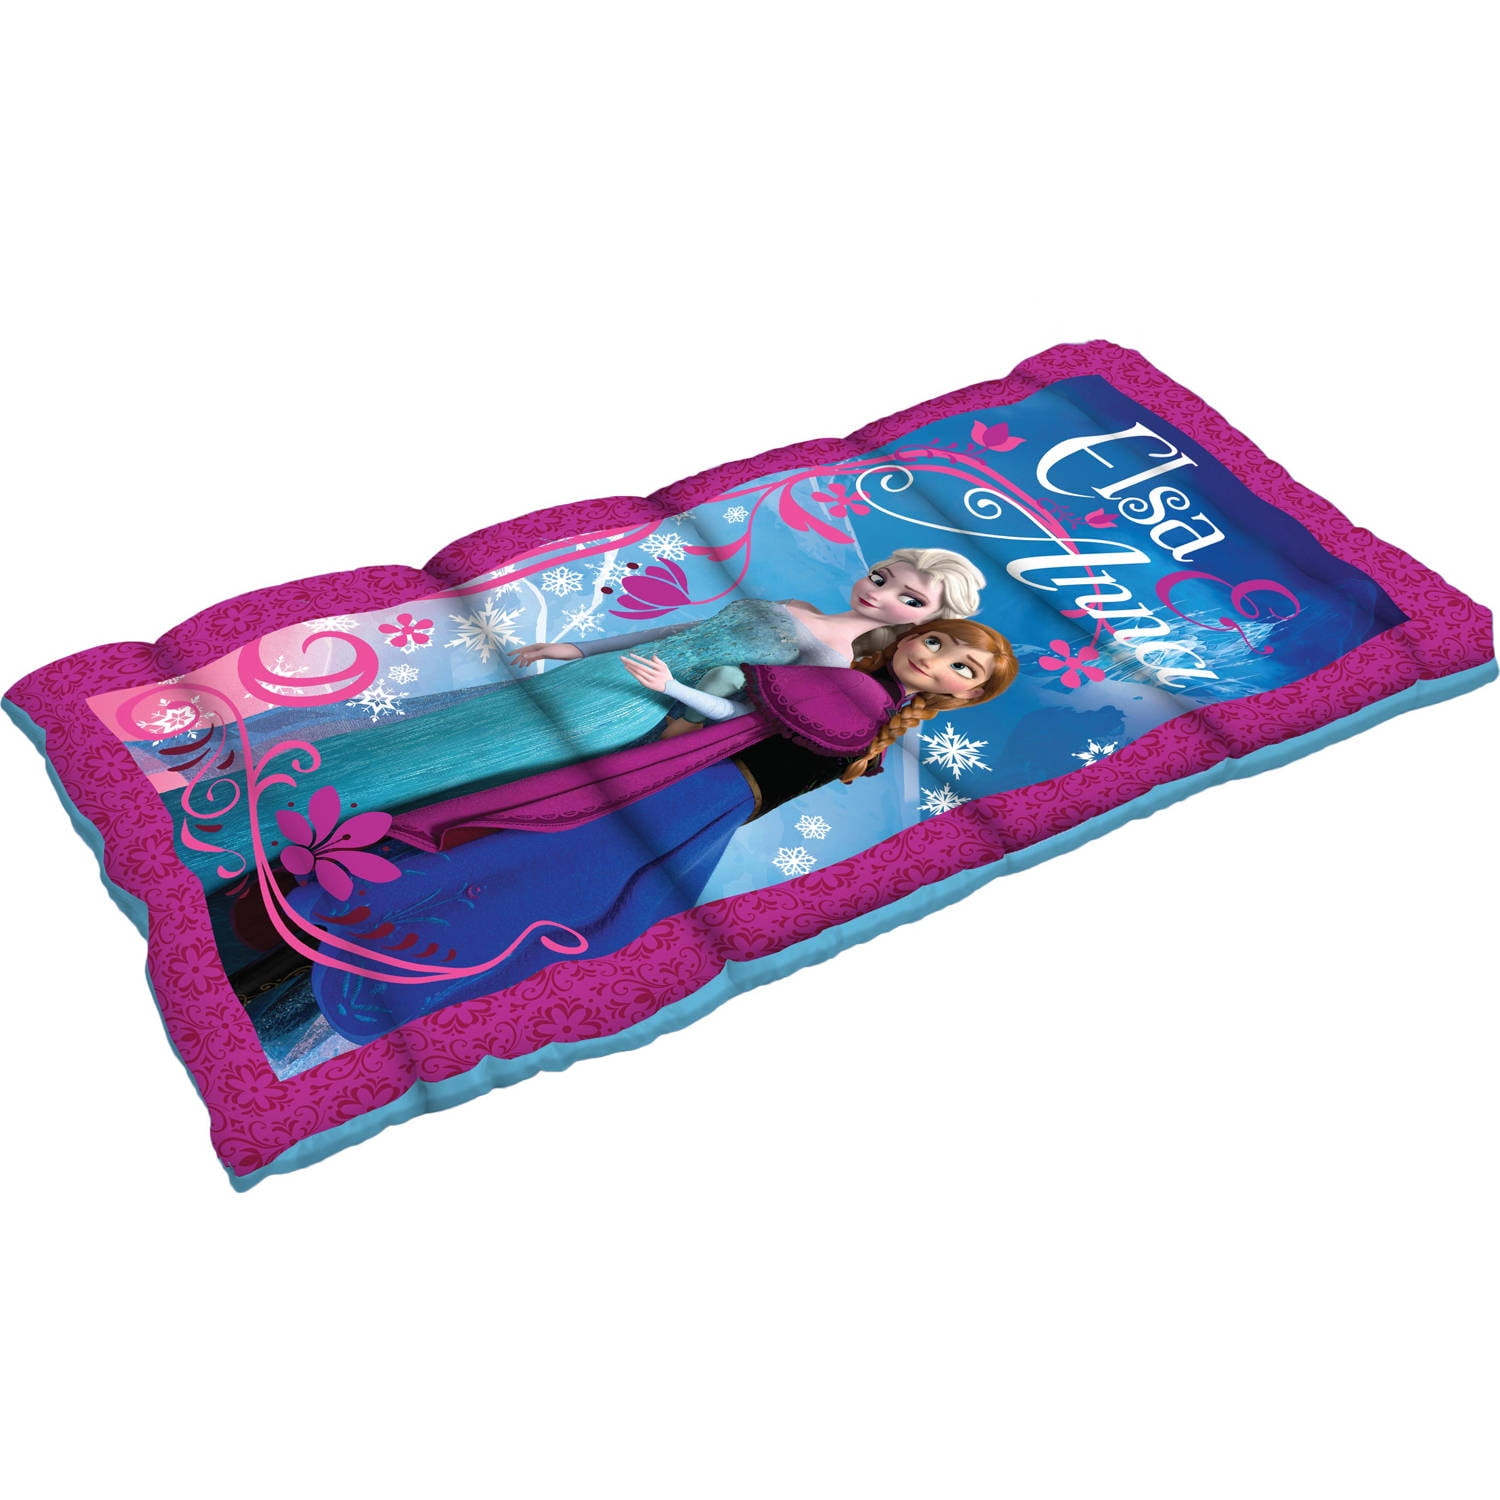 Disney Frozen 50 F Rectangular Sleeping Bag 91ffed33 9c73 4459 93bf bc5d3b6af9f7 1.d414b02bd55f1cd99bdfab4f1be0e524